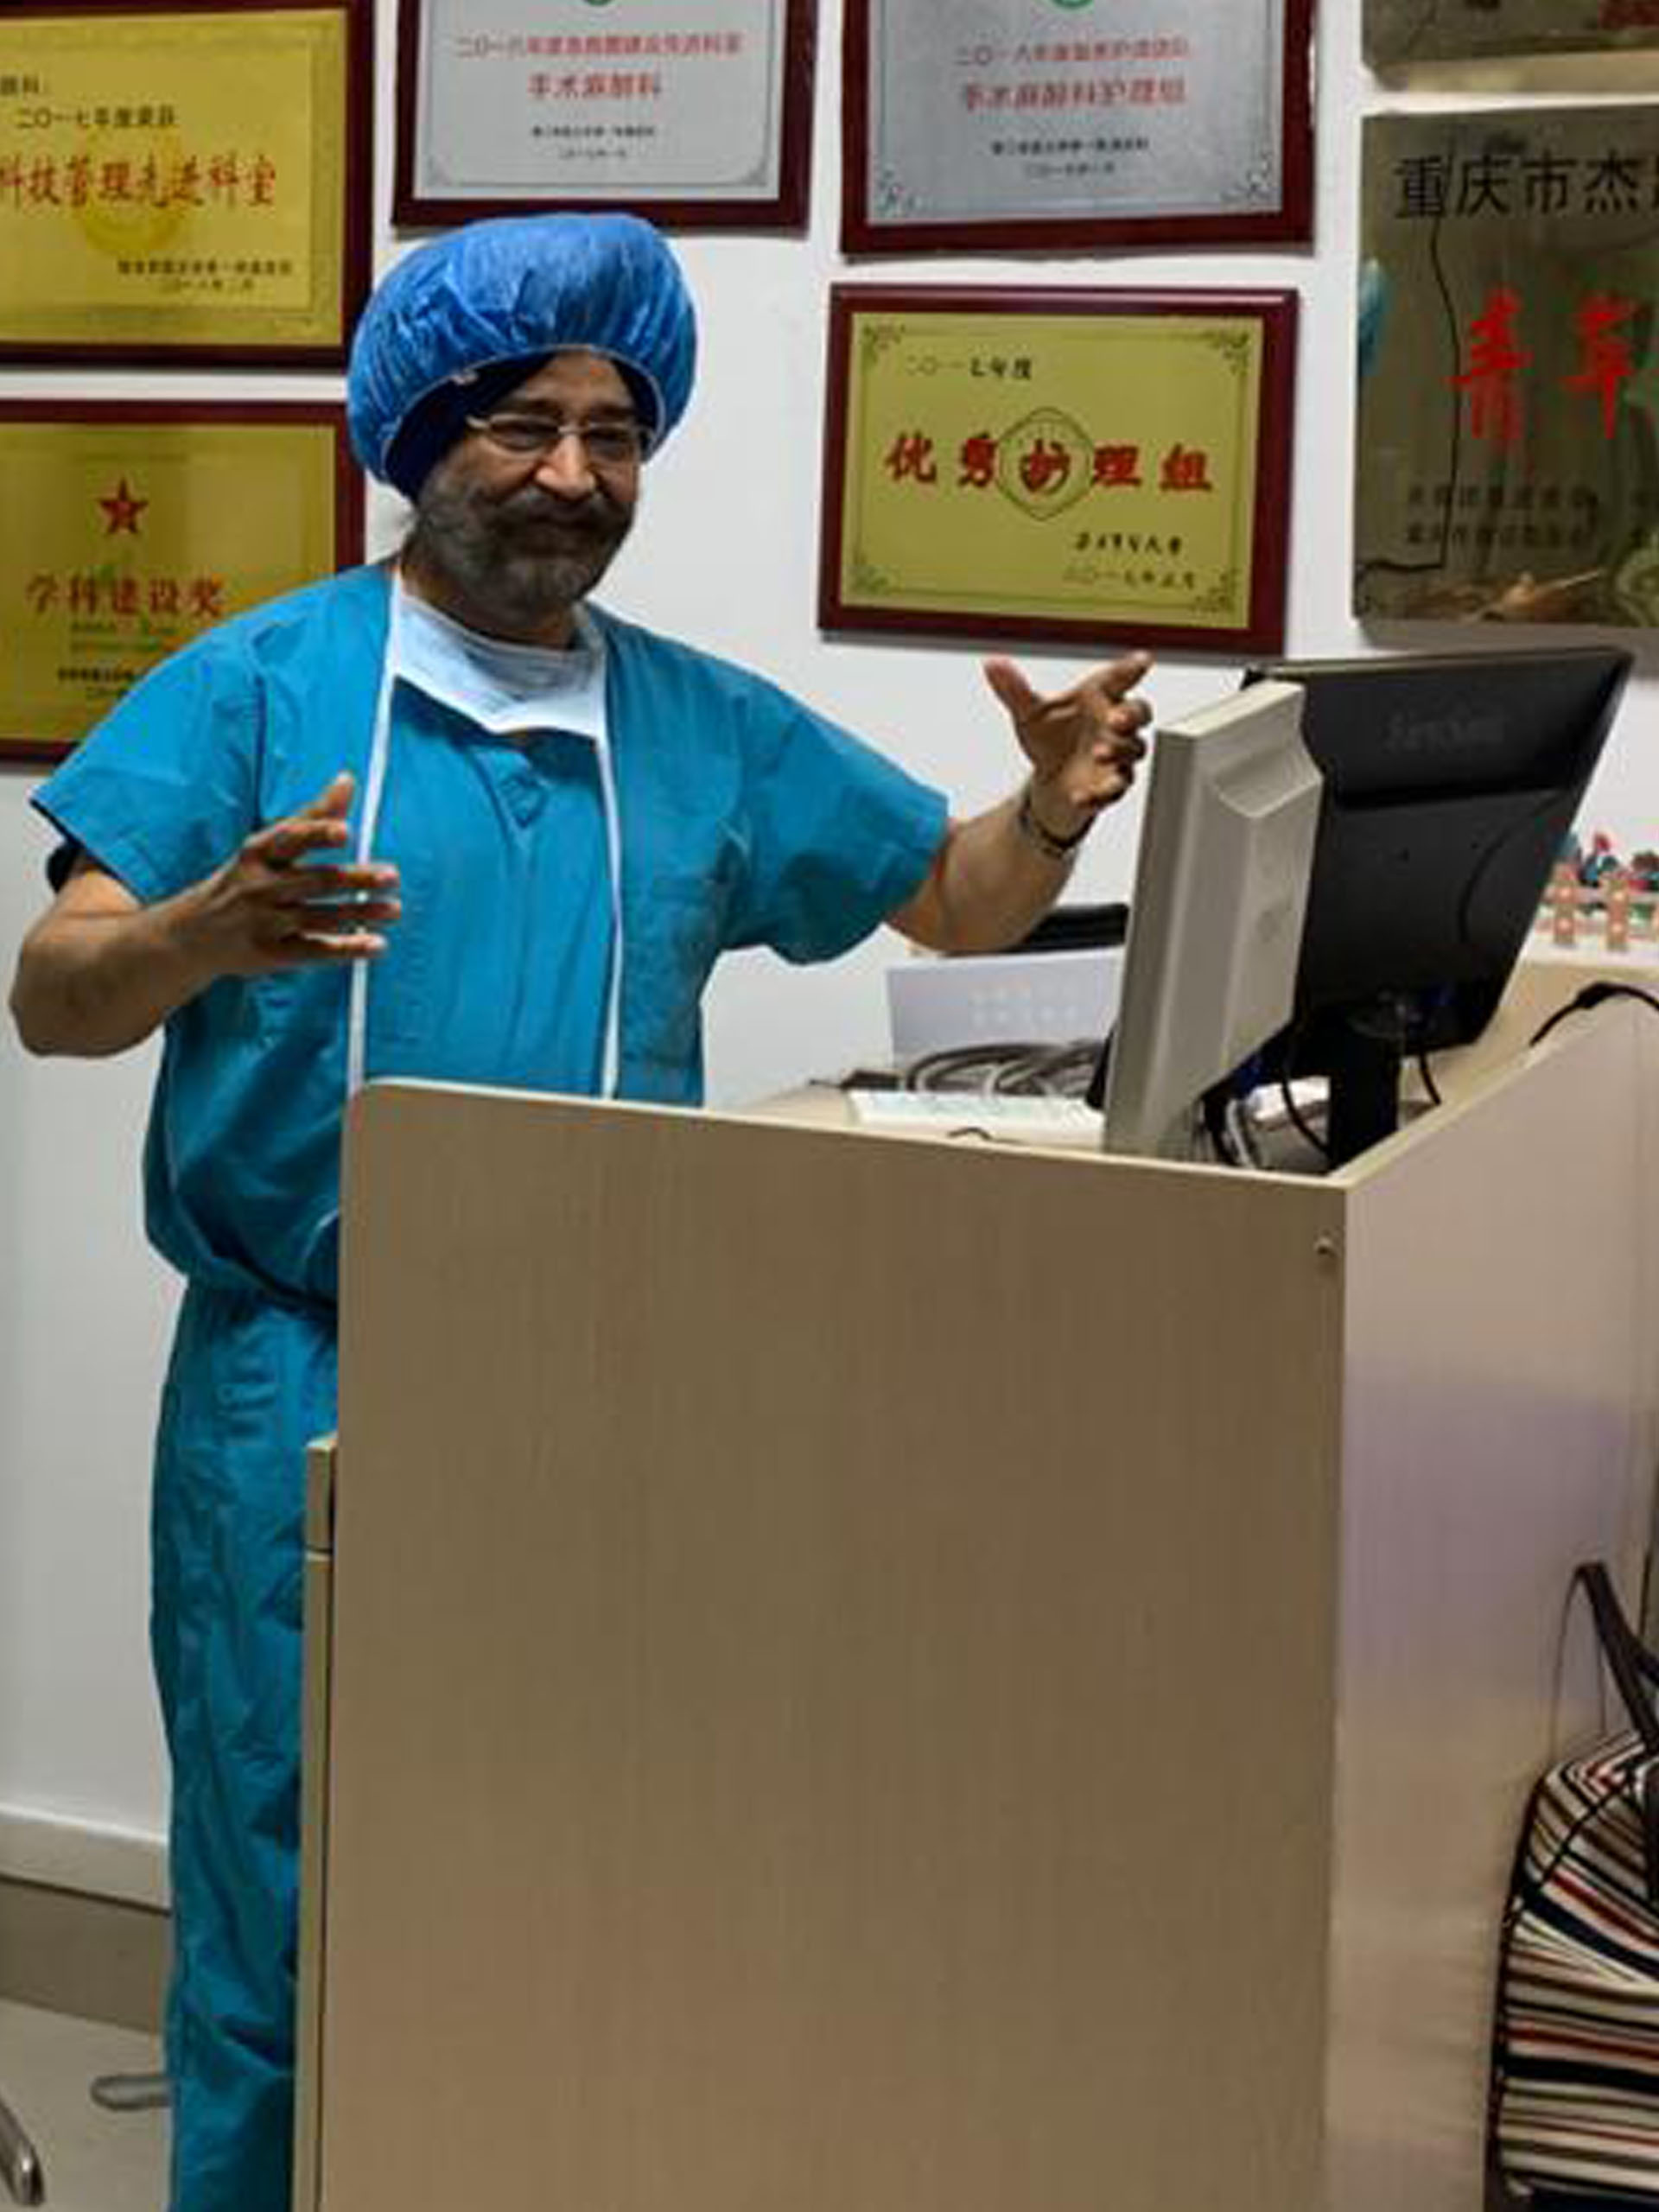 Clinic Tour in Hunjan Hospital